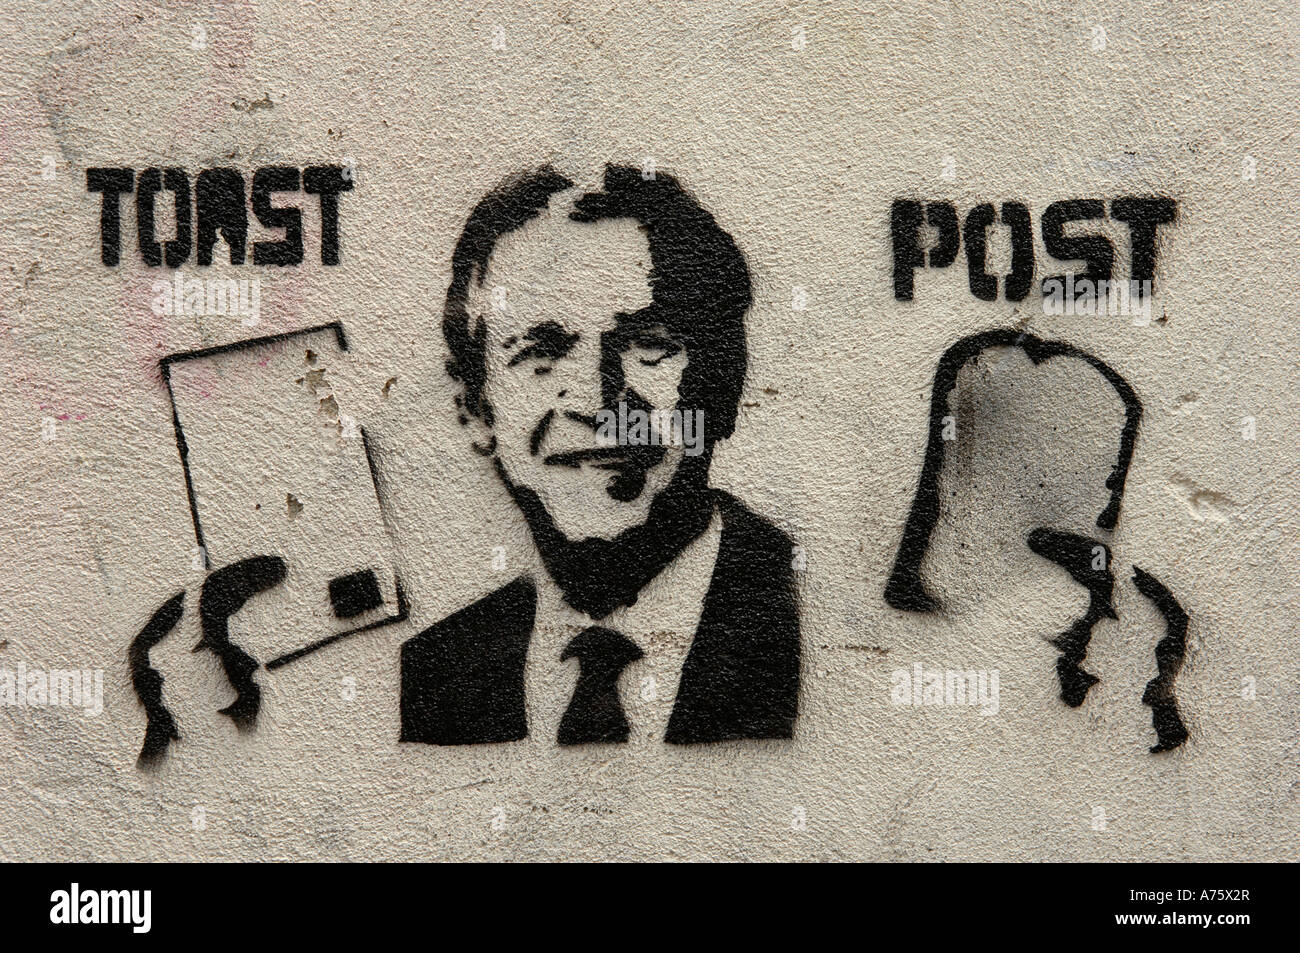 Cartrain George Bush Toast Post Graffiti Artist Banksy Style Stock Photo